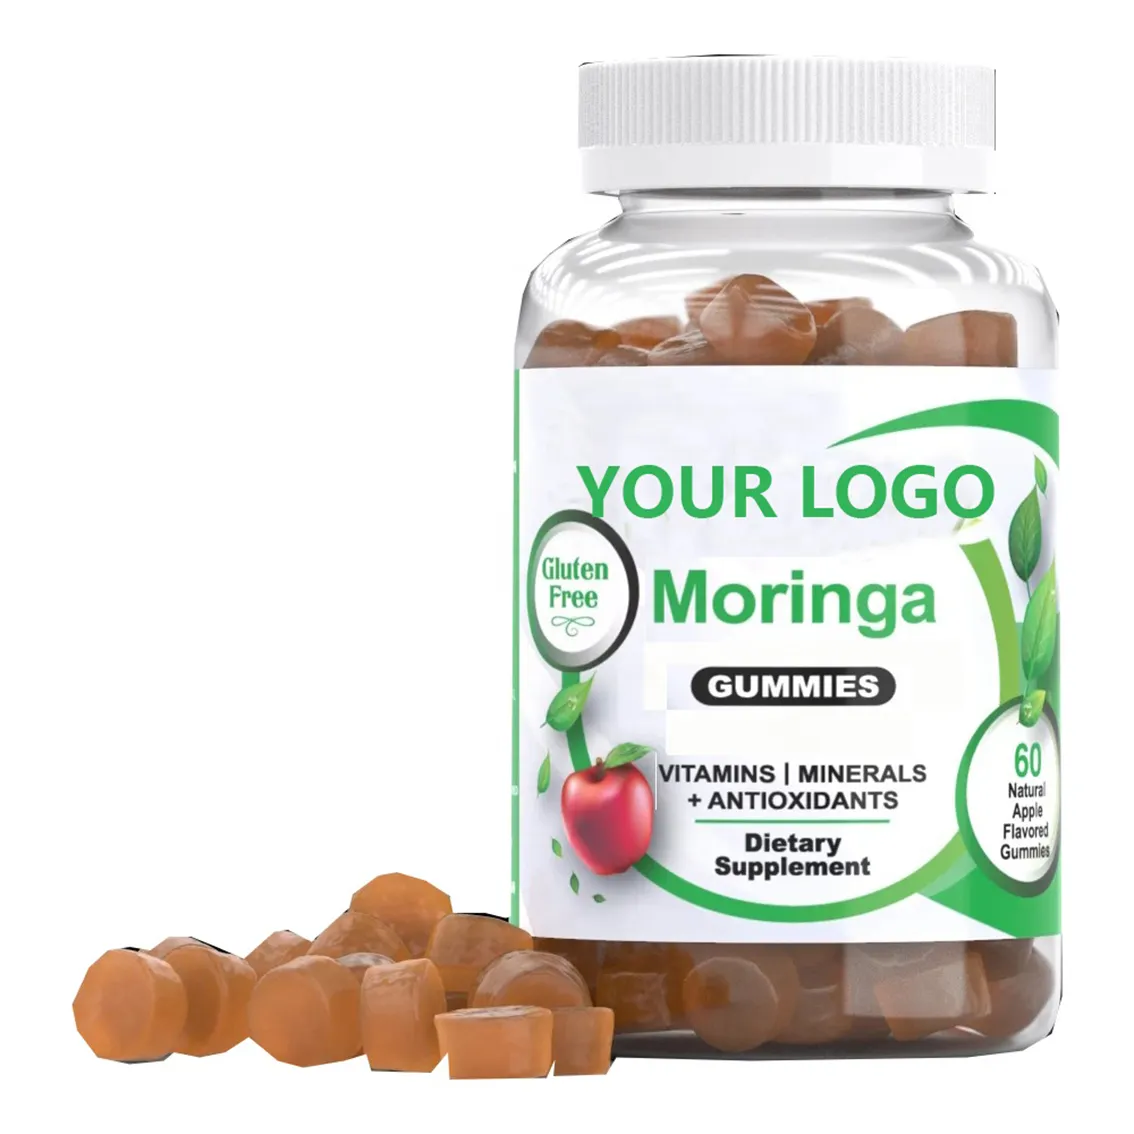 Großhandels preis Bio-Blatt Softgel Moringa Tablette Pillen Moringa Gummies Kapsel zum Verkauf für Detox und Antioxidantien